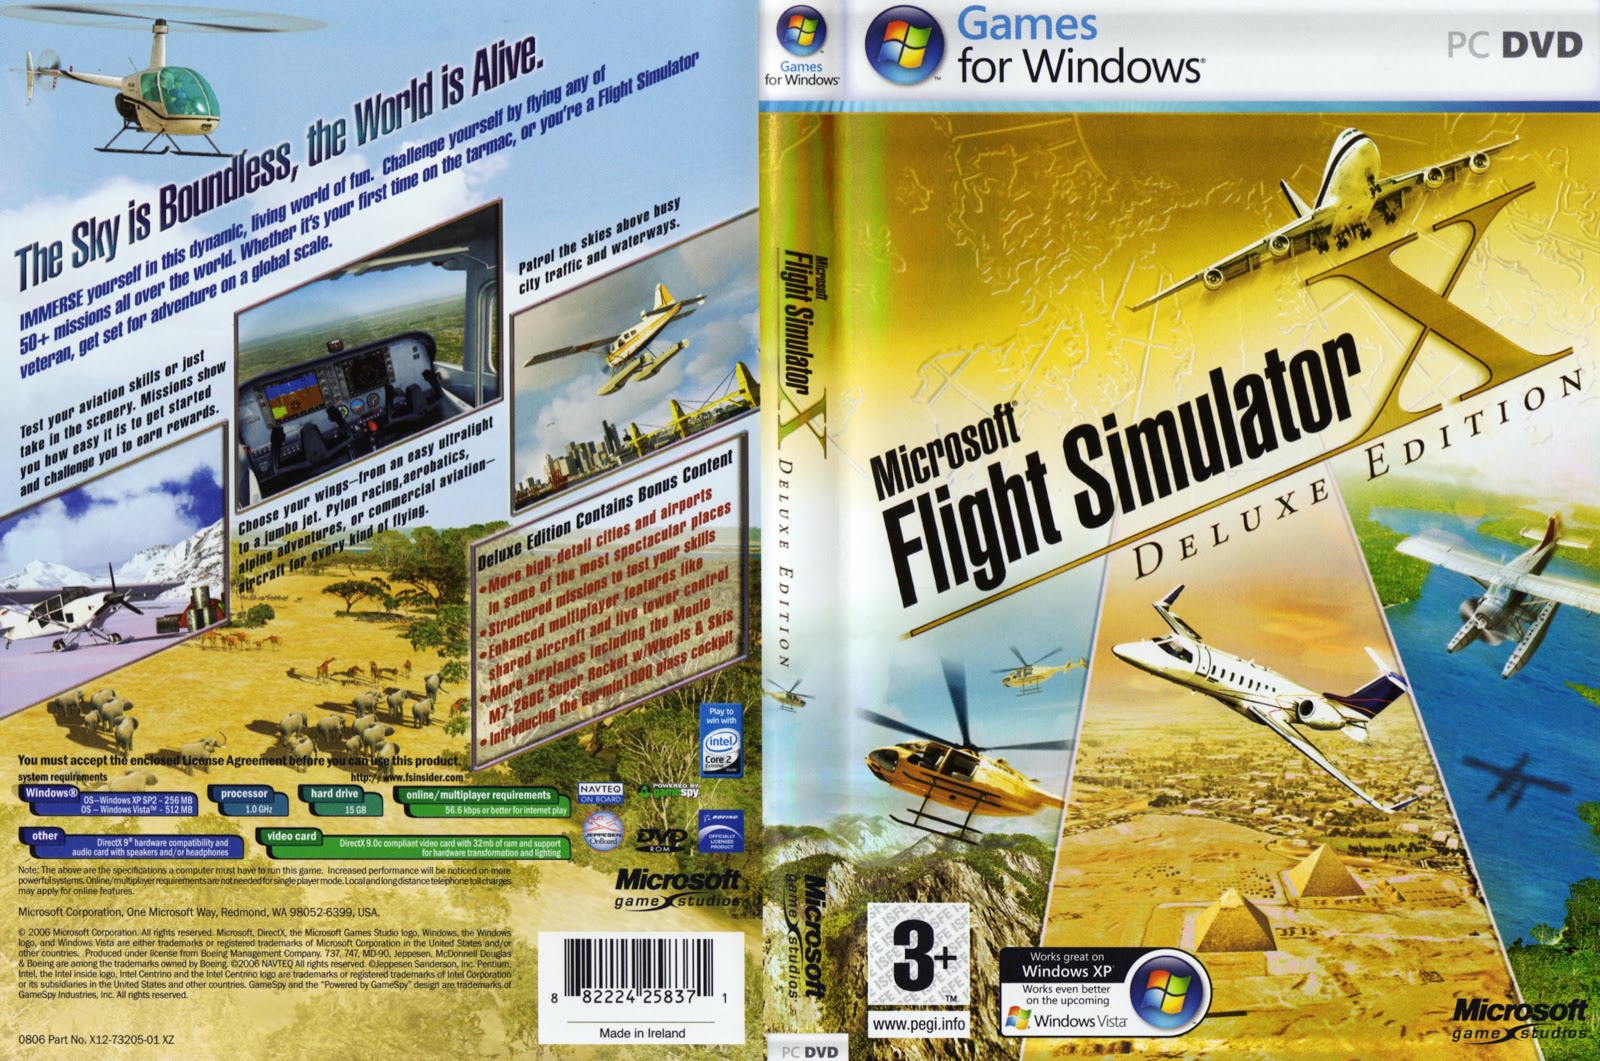 microsoft flight simulator x gold edition free download windows 7